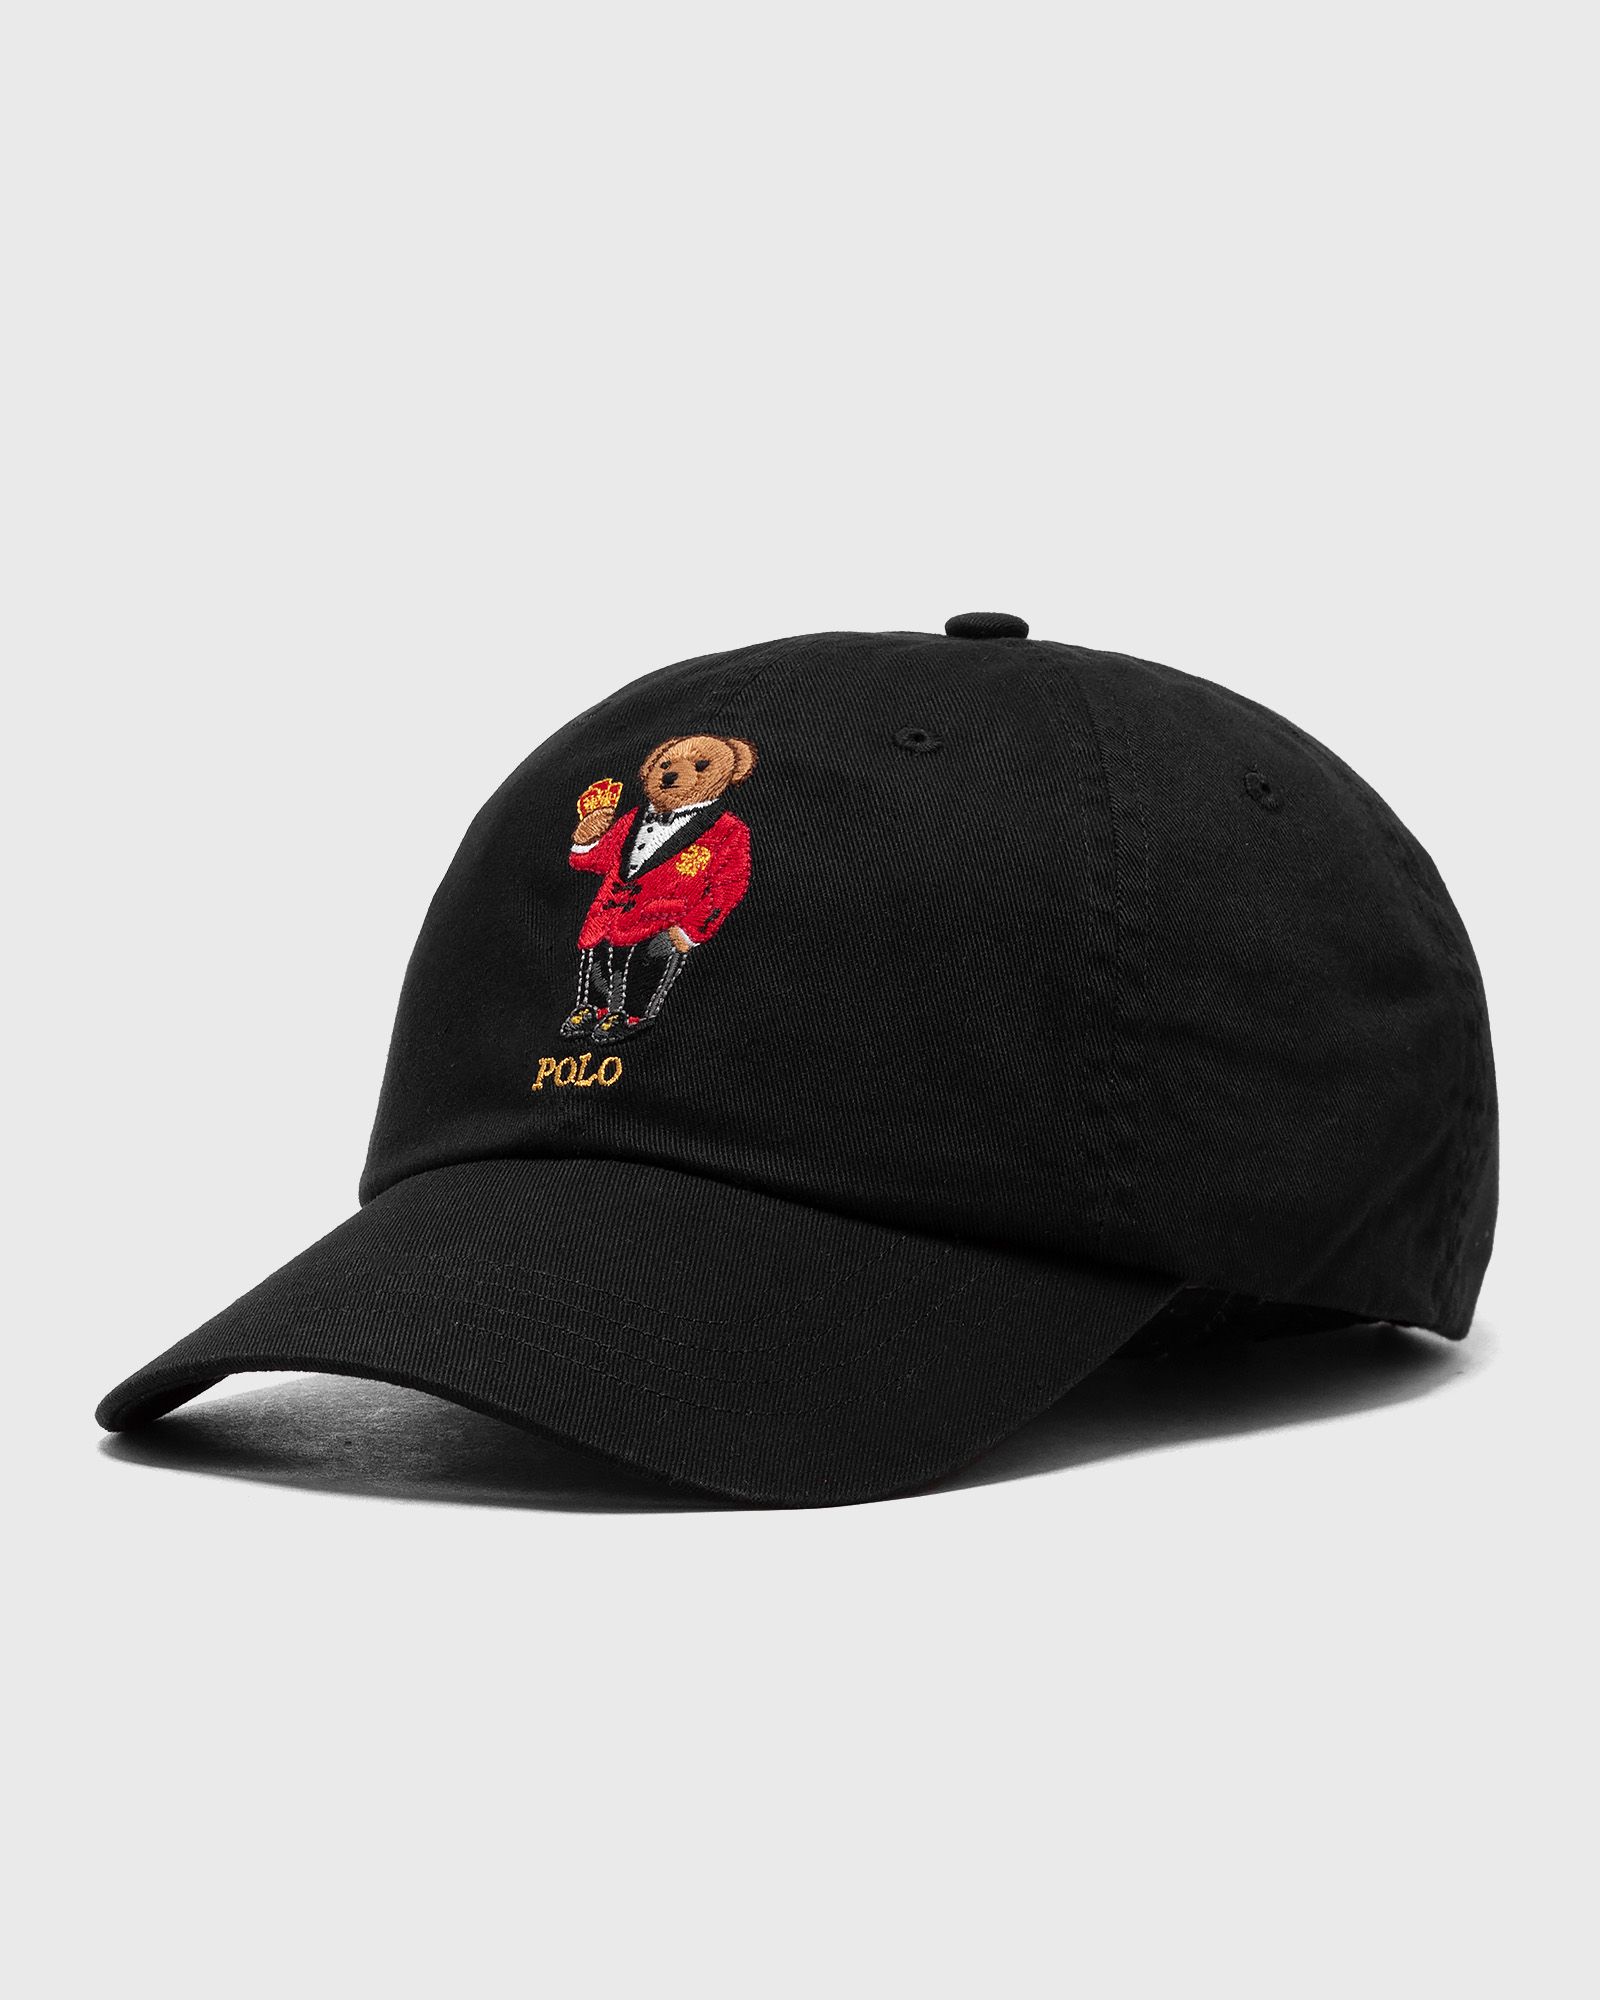 Polo Ralph Lauren - lnybearcap-cap-hat men caps black in größe:one size